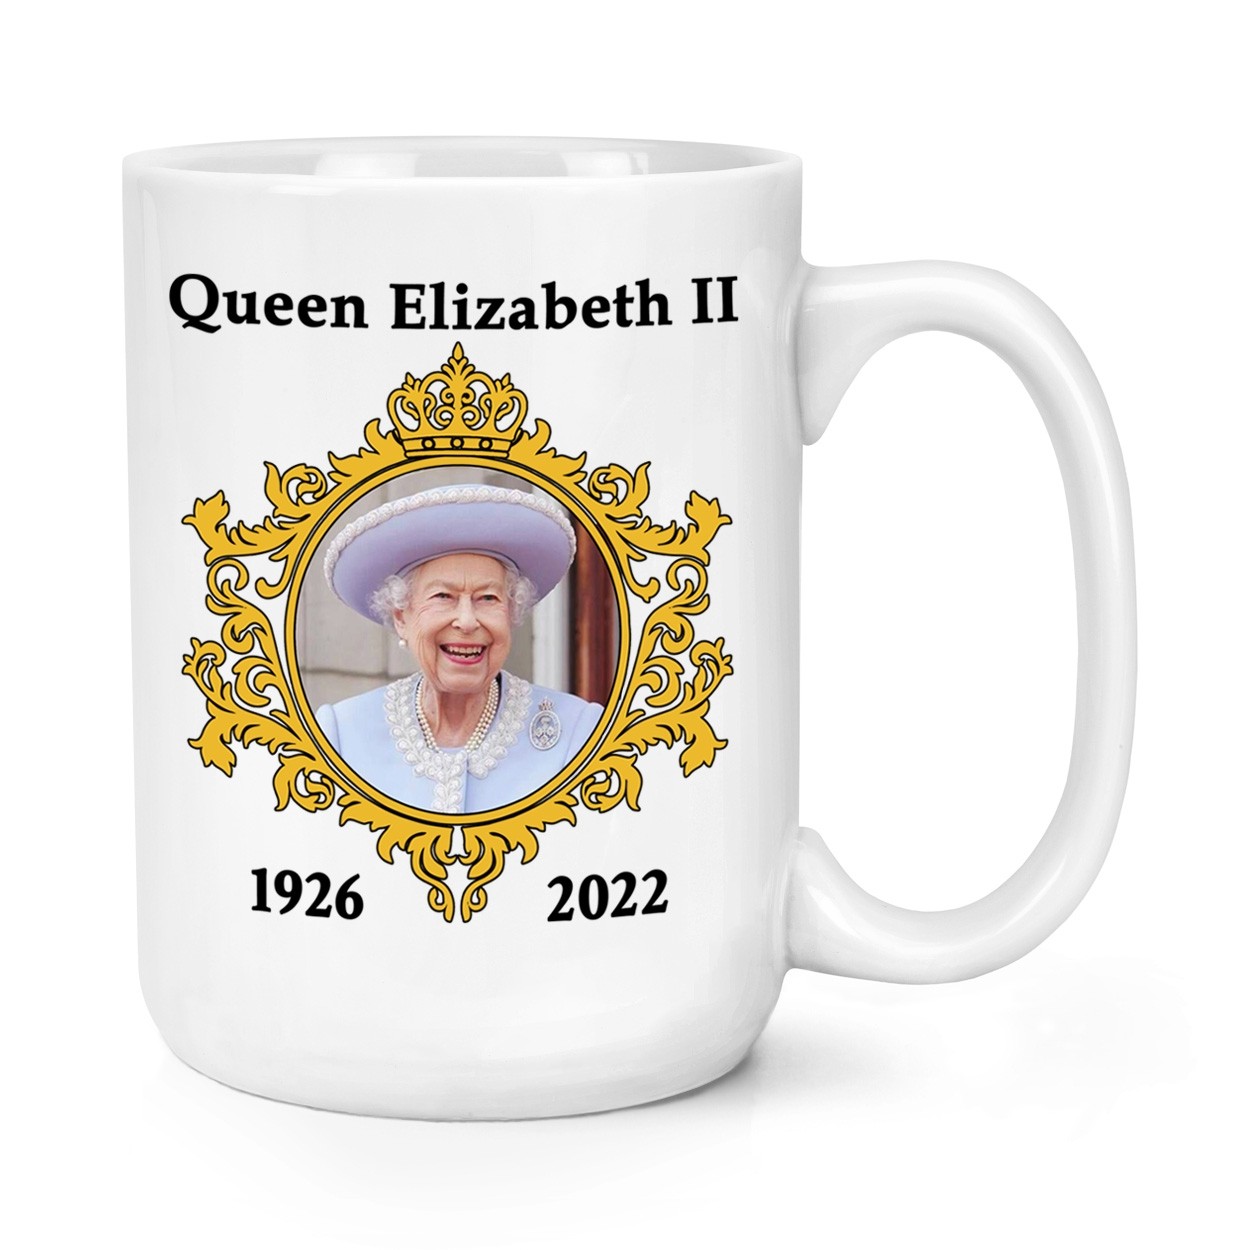 Queen Elizabeth II 1926 - 2022 15oz Large Mug Cup Commemorative Gift Her Majesty